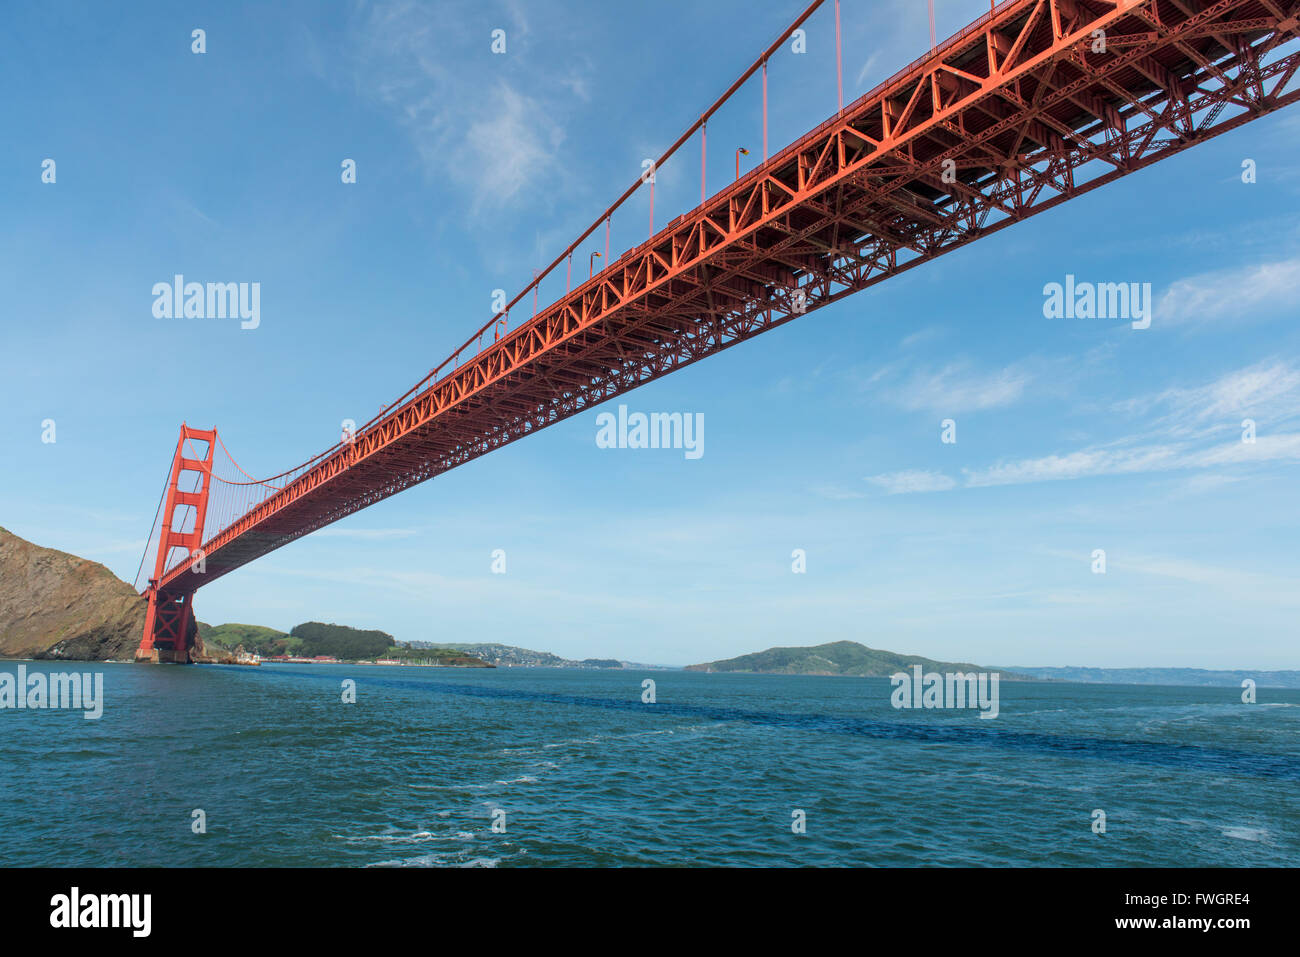 The Golden Gate Bridge, as seen from underneath, The Bay Area, San Francisco, California, USA. Stock Photo